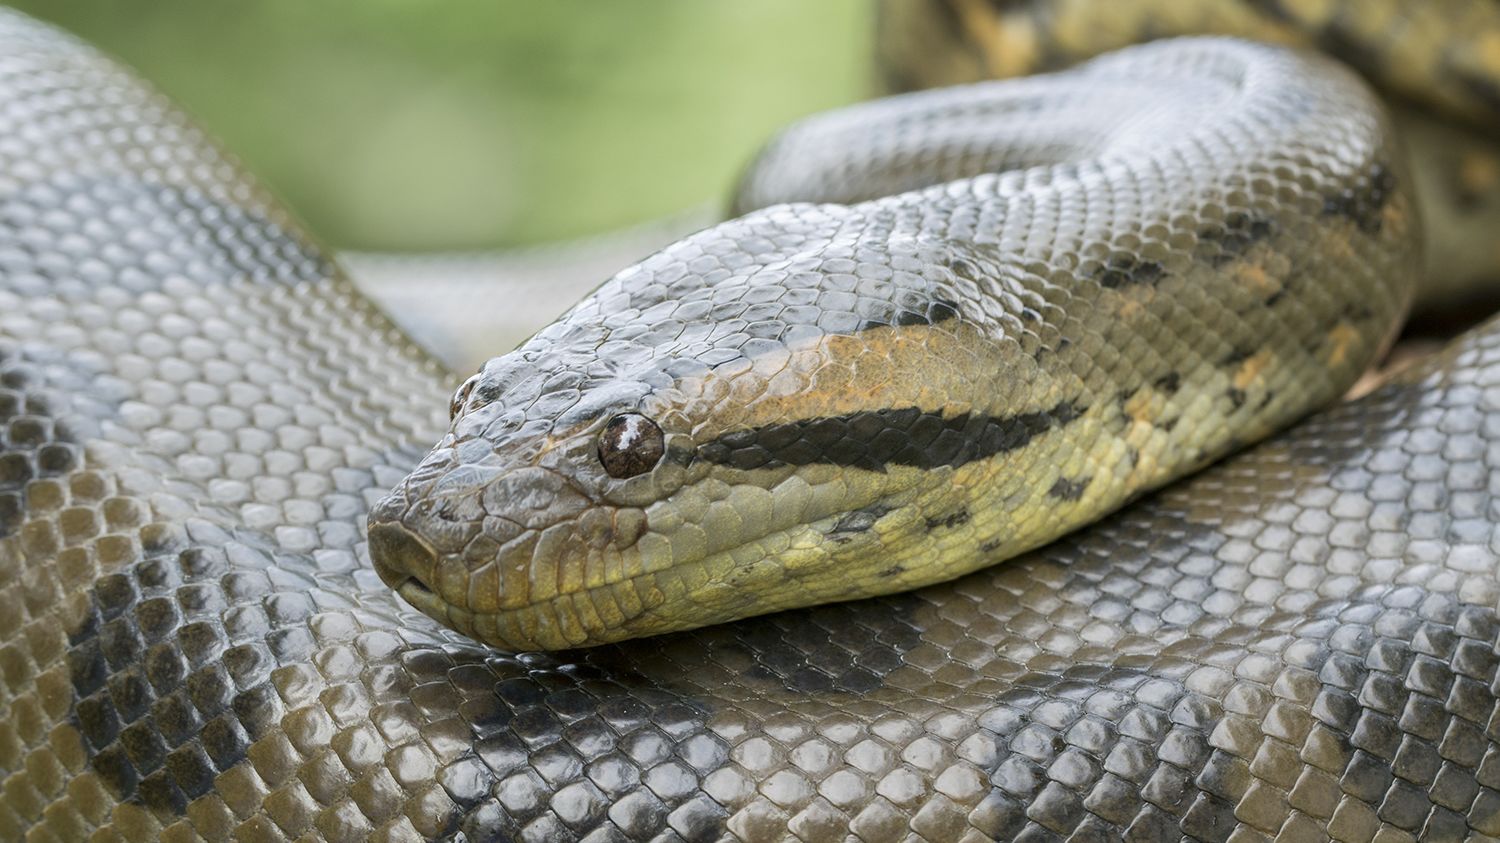 11 Fun Facts About Anacondas Mental Floss